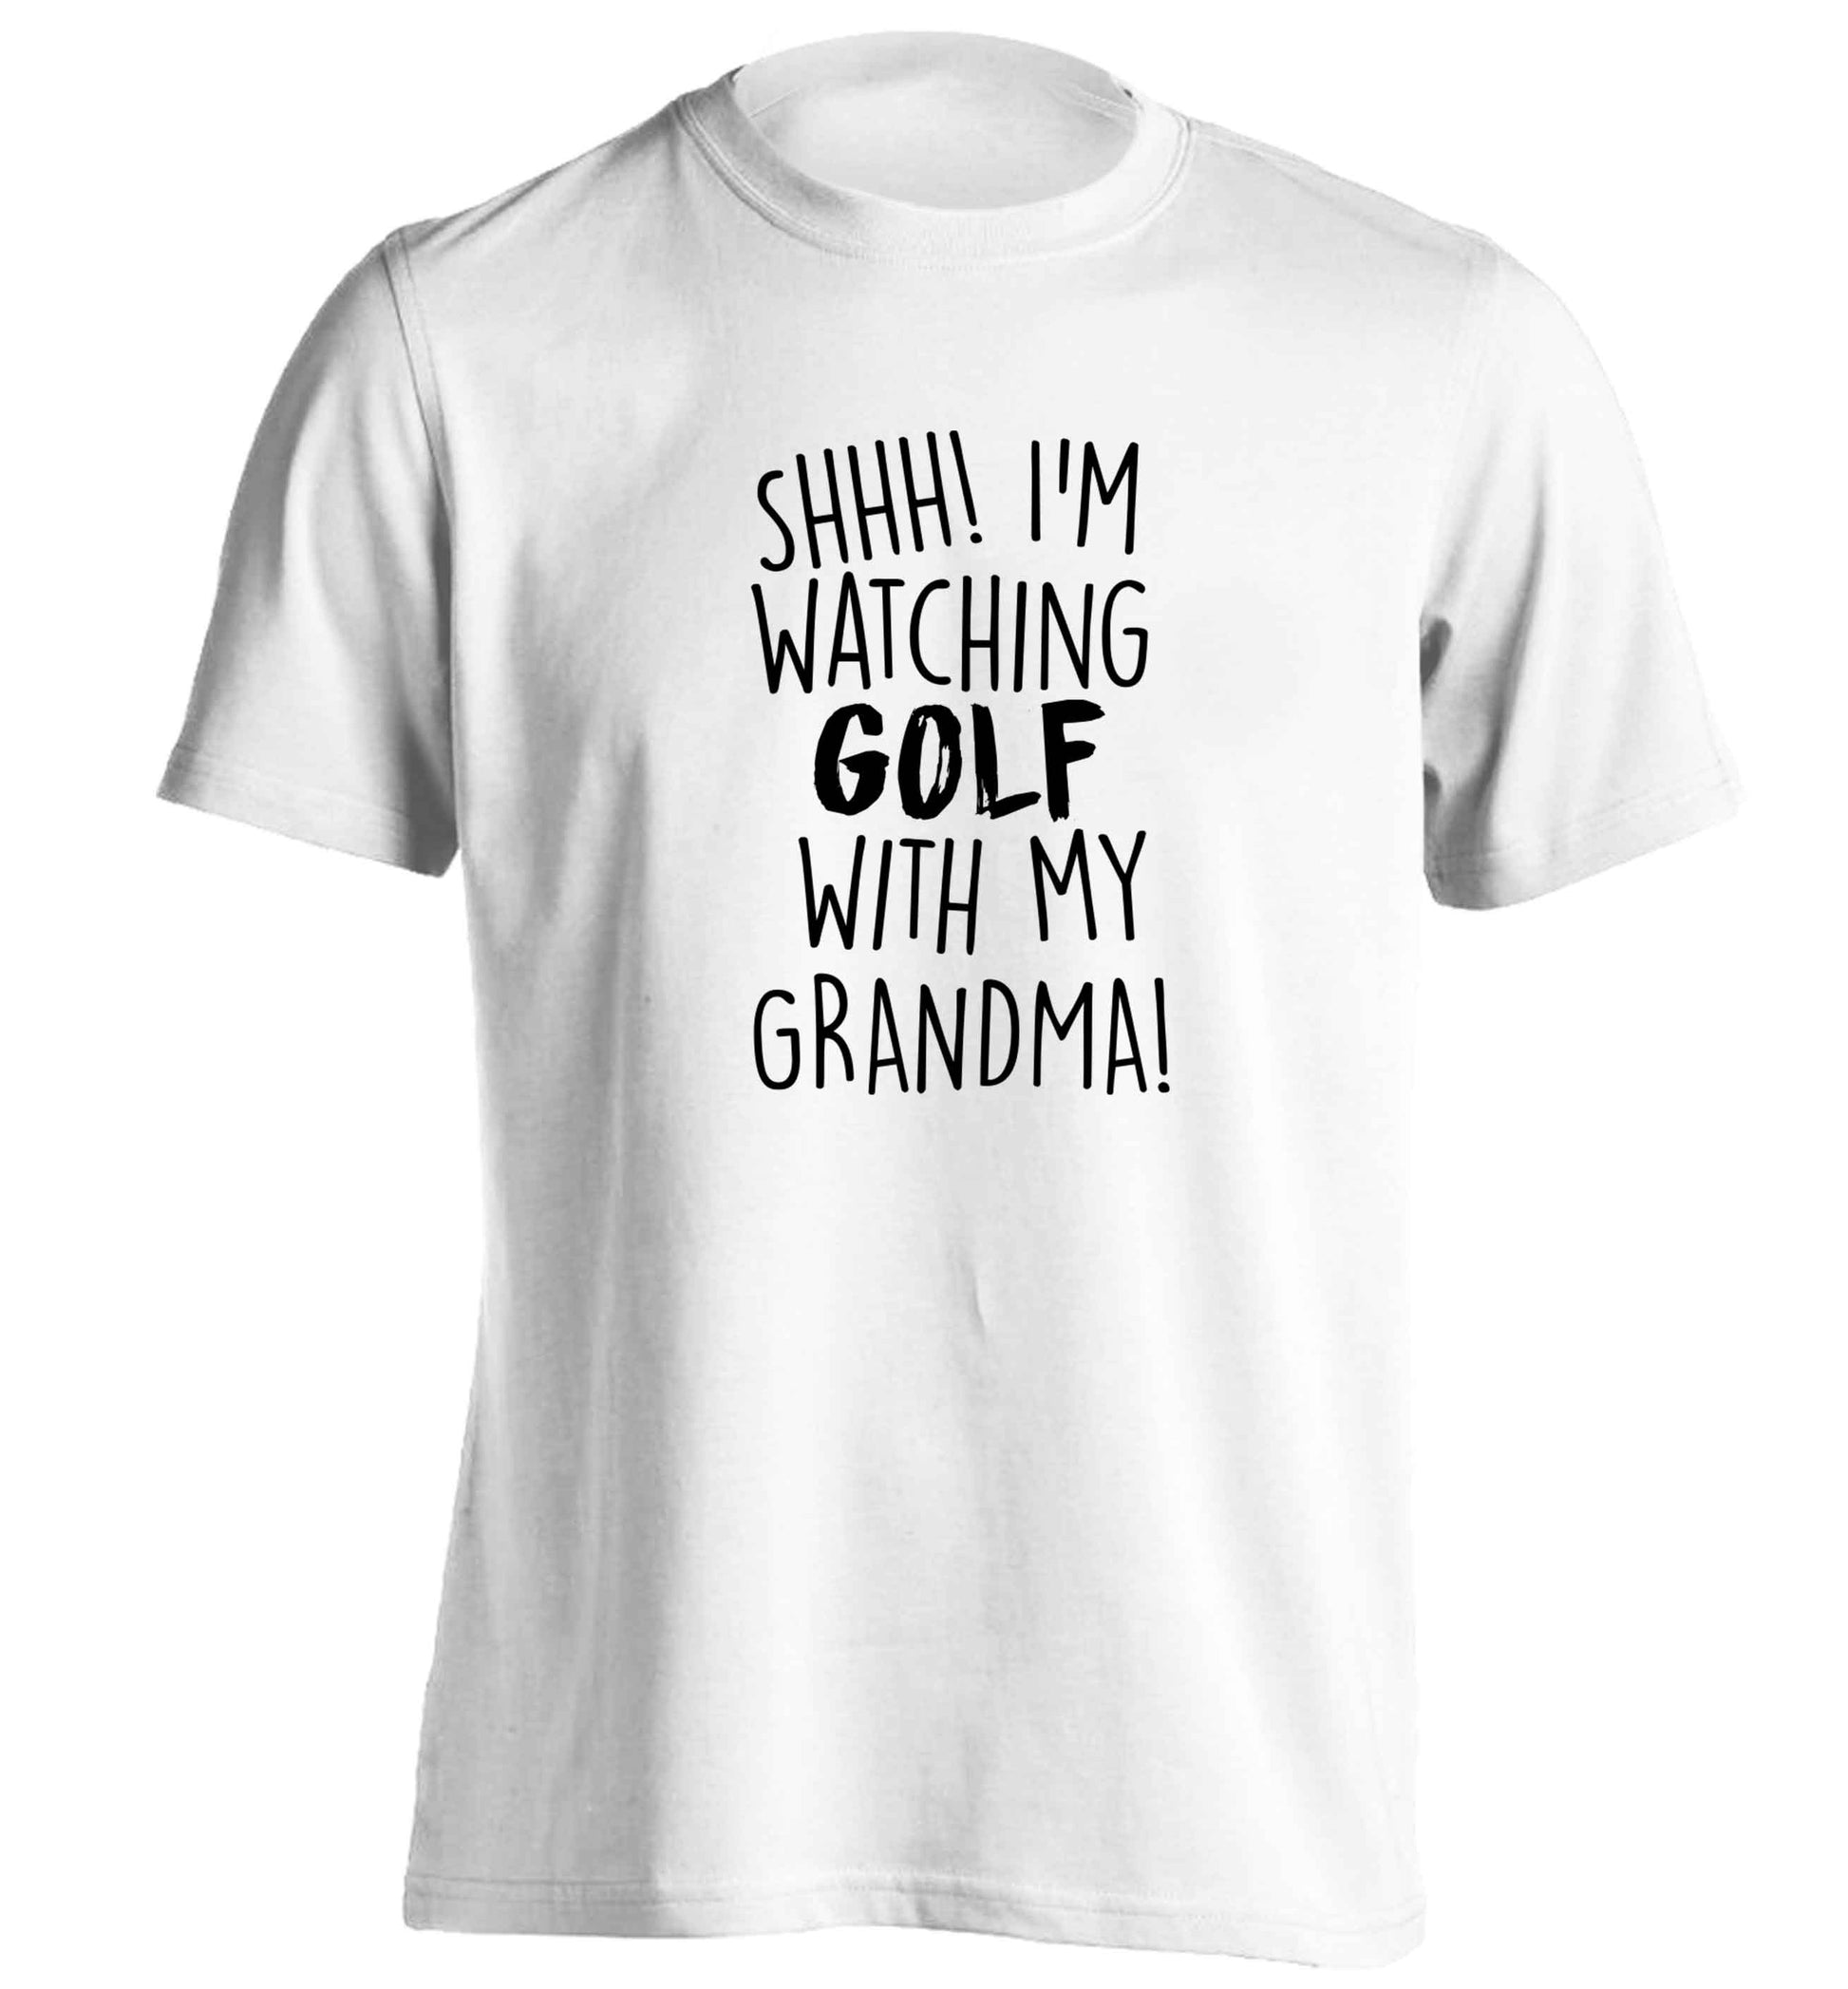 Shh I'm watching golf with my grandma adults unisex white Tshirt 2XL